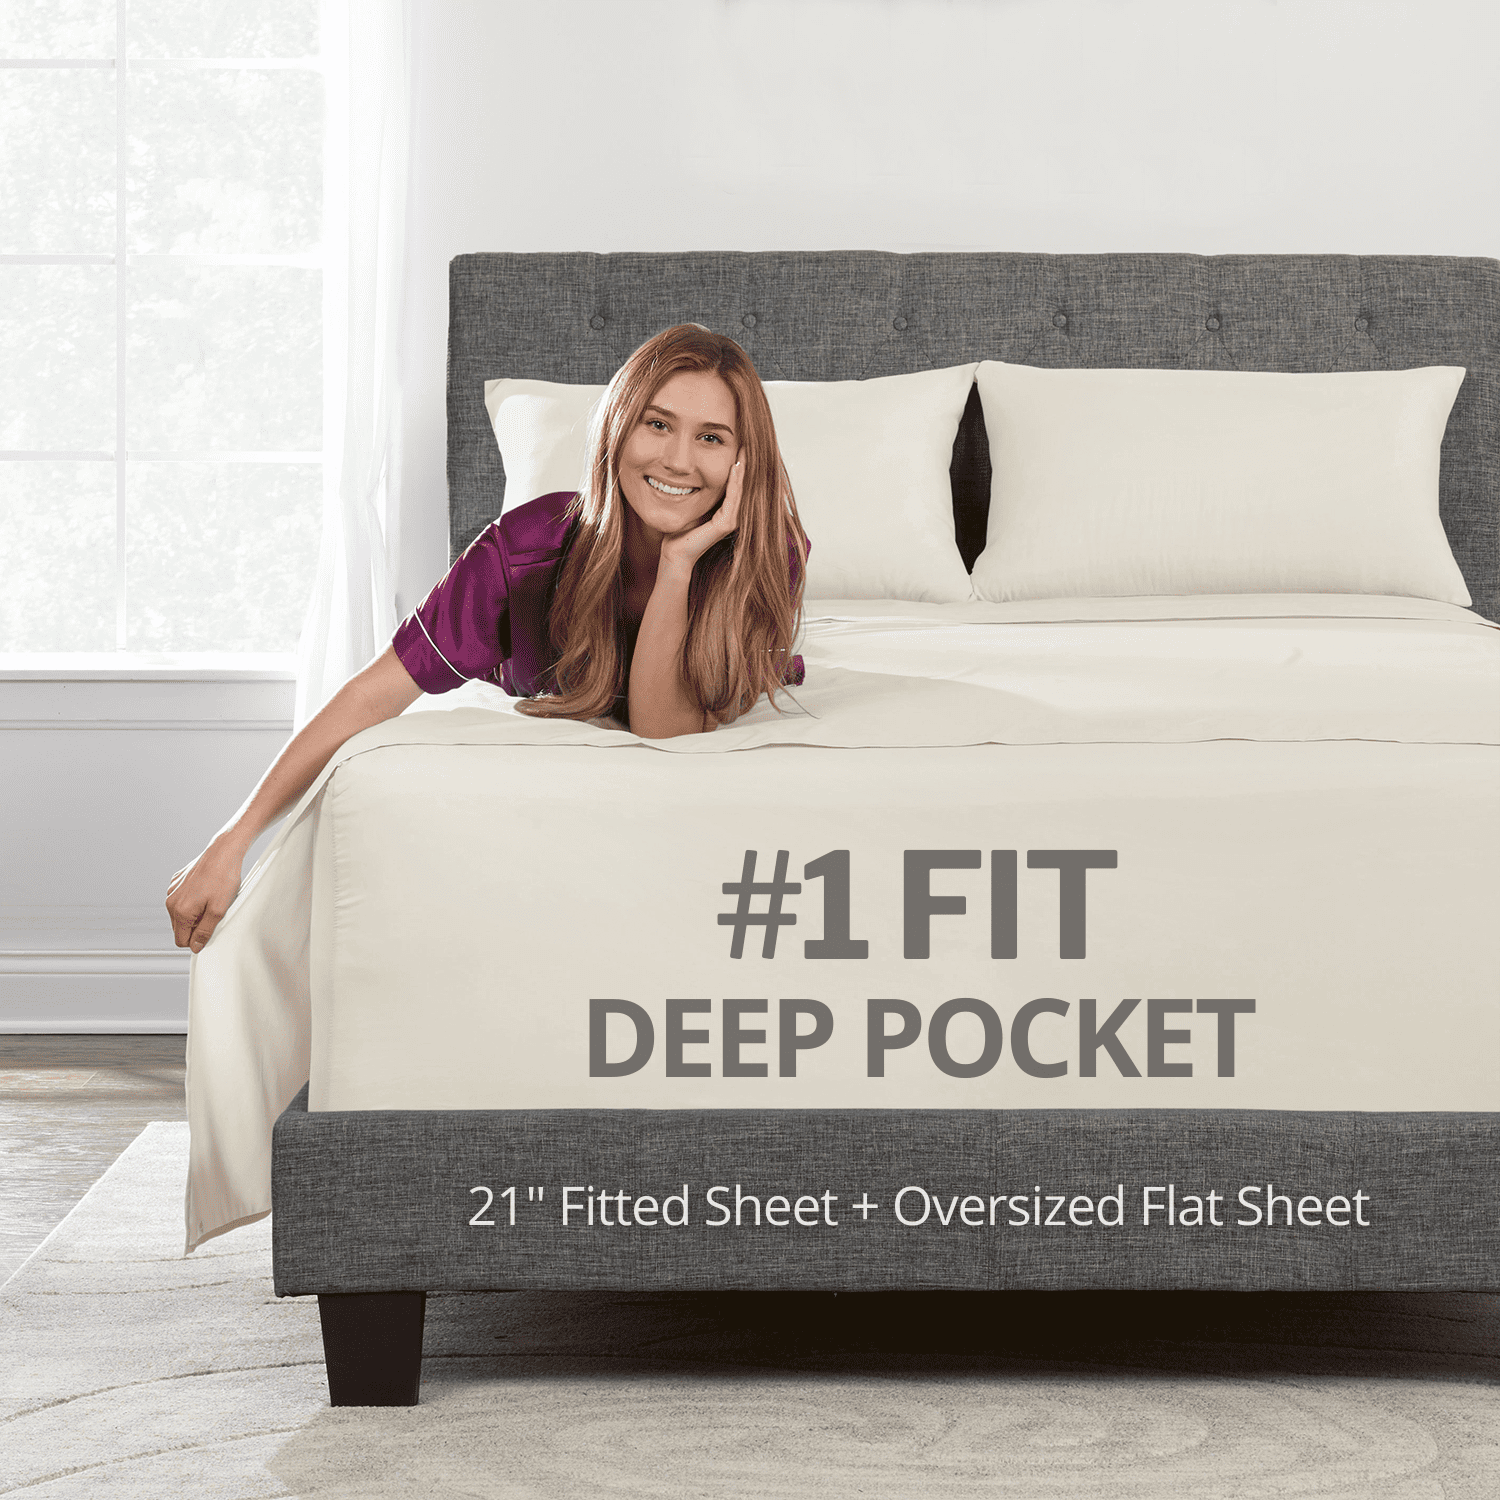 Bedsure Deep Pocket Queen Sheets Set - Fits Mattresses Up to 21 Thick, 4 Piece Air Mattress Sheets with Deep Pocket, Moisture Wicking Soft Cooling